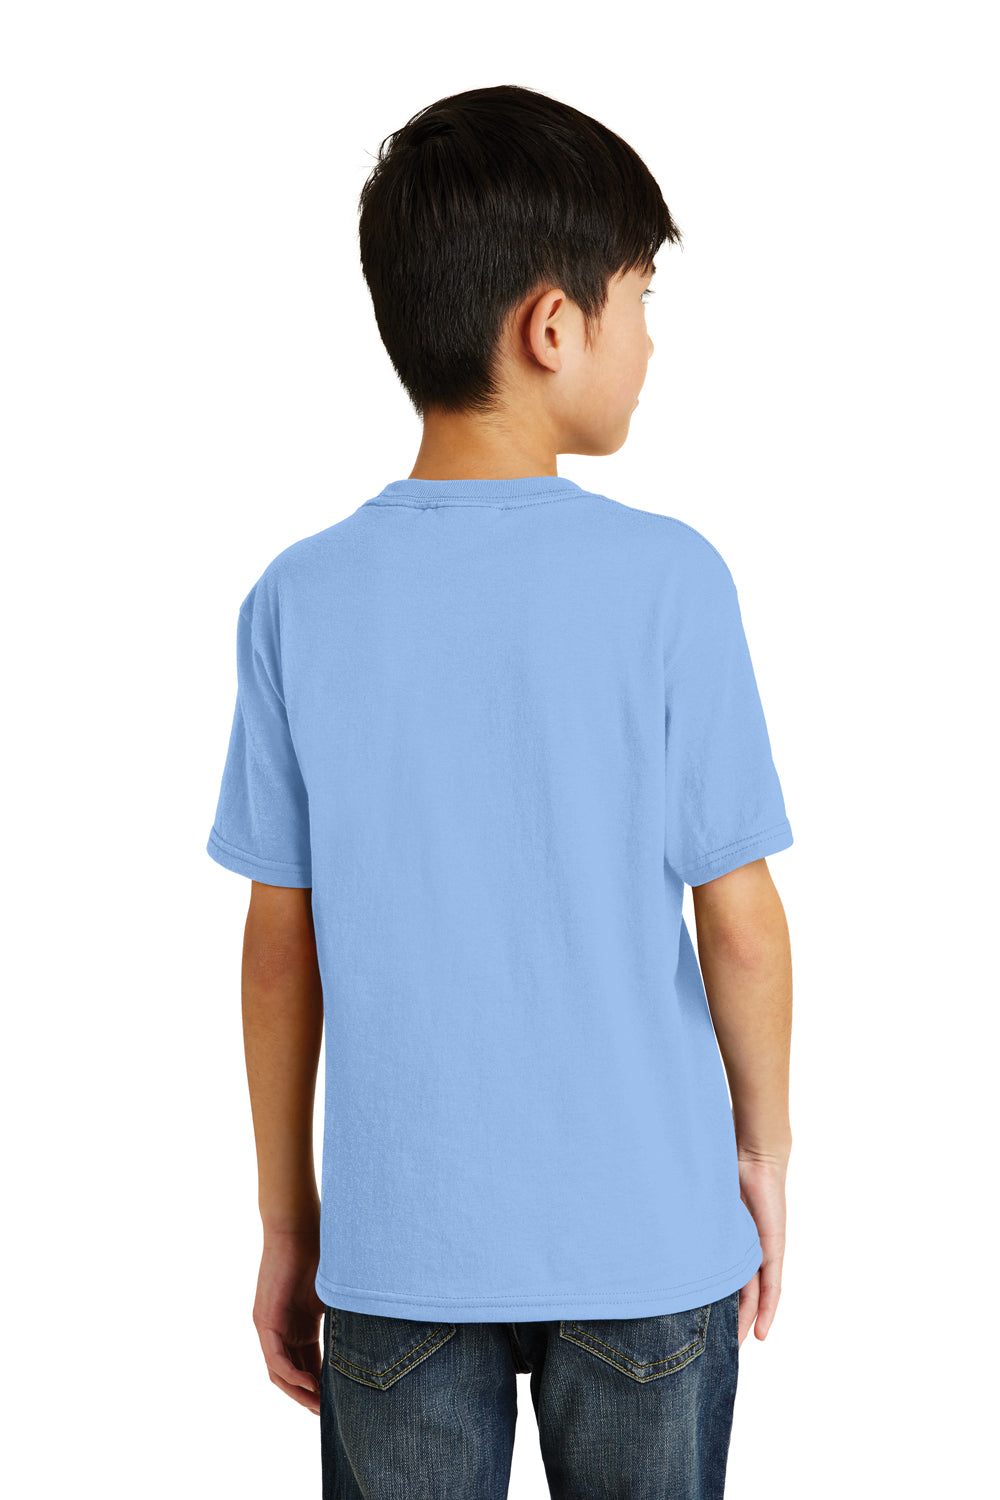 Port & Company PC55Y Youth Core Short Sleeve Crewneck T-Shirt Light Blue Back